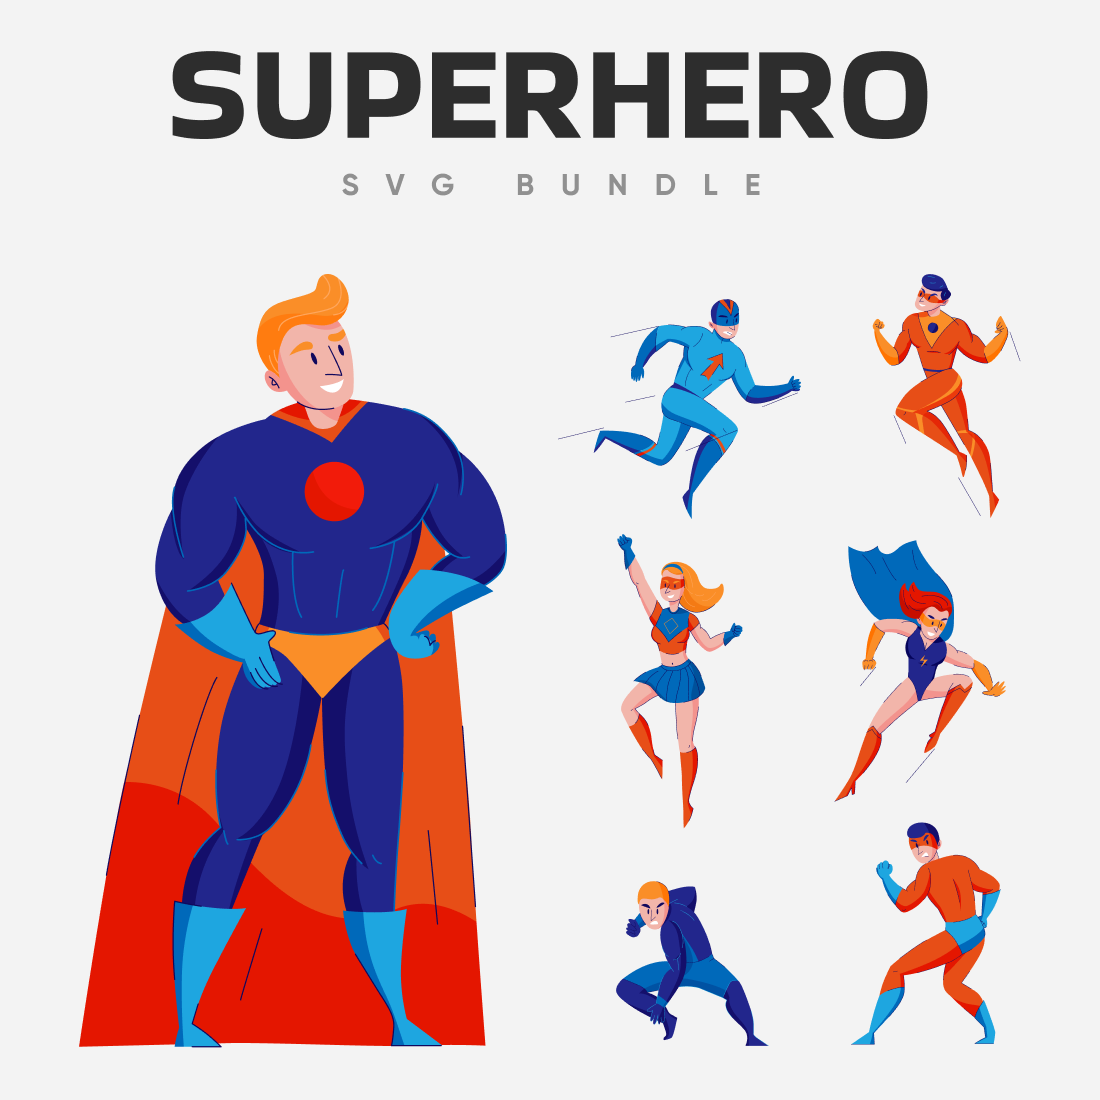 Superhero SVG bundle.